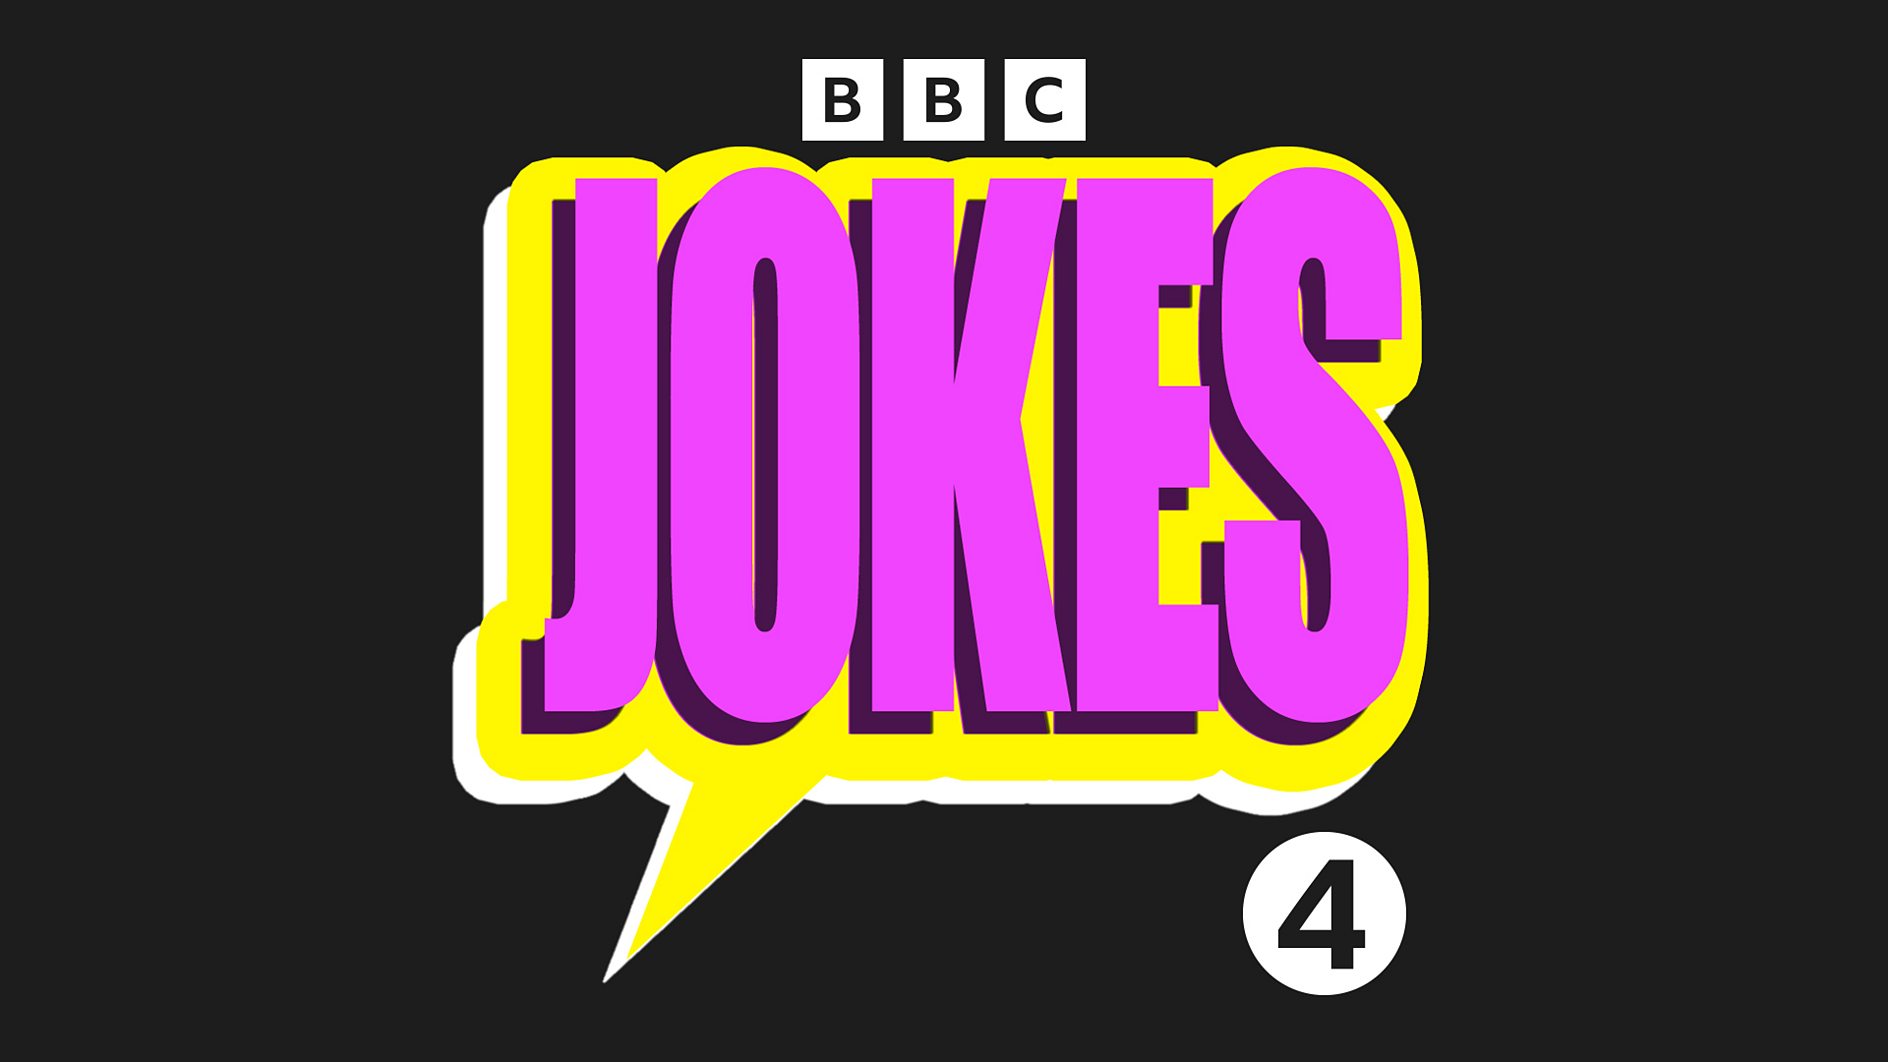 BBC Radio 4 launches new podcast feed, Jokes, showcasing best original comedy